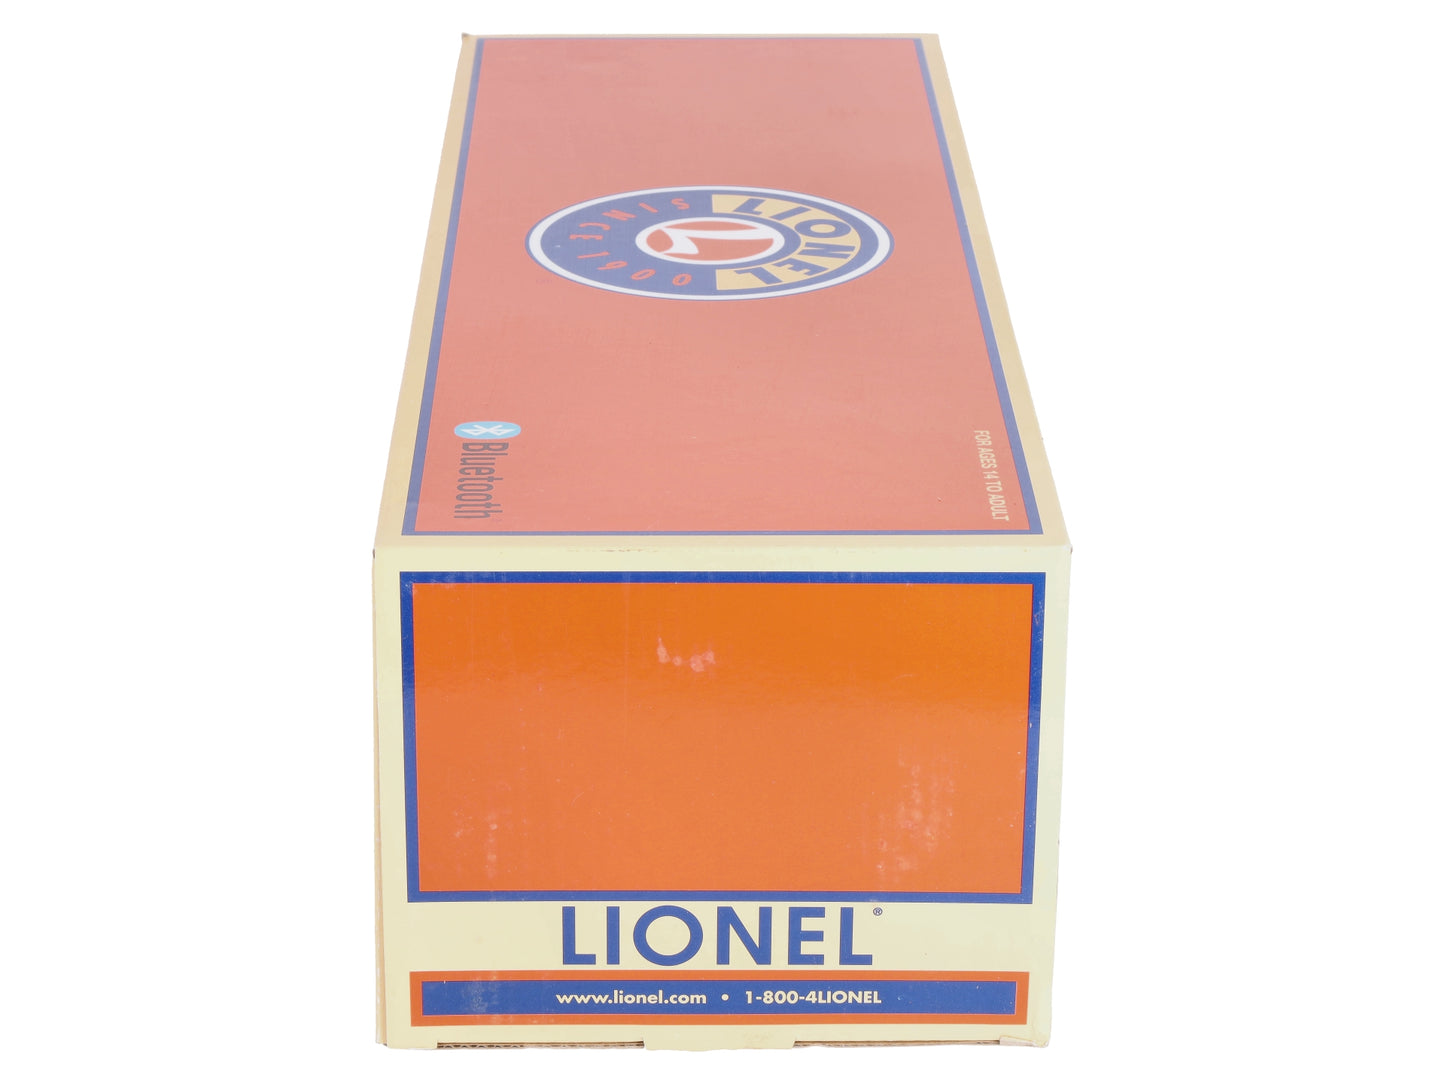 Lionel 2233200 Santa Fe SW1200 Diesel Switcher #1441 with LEGACY